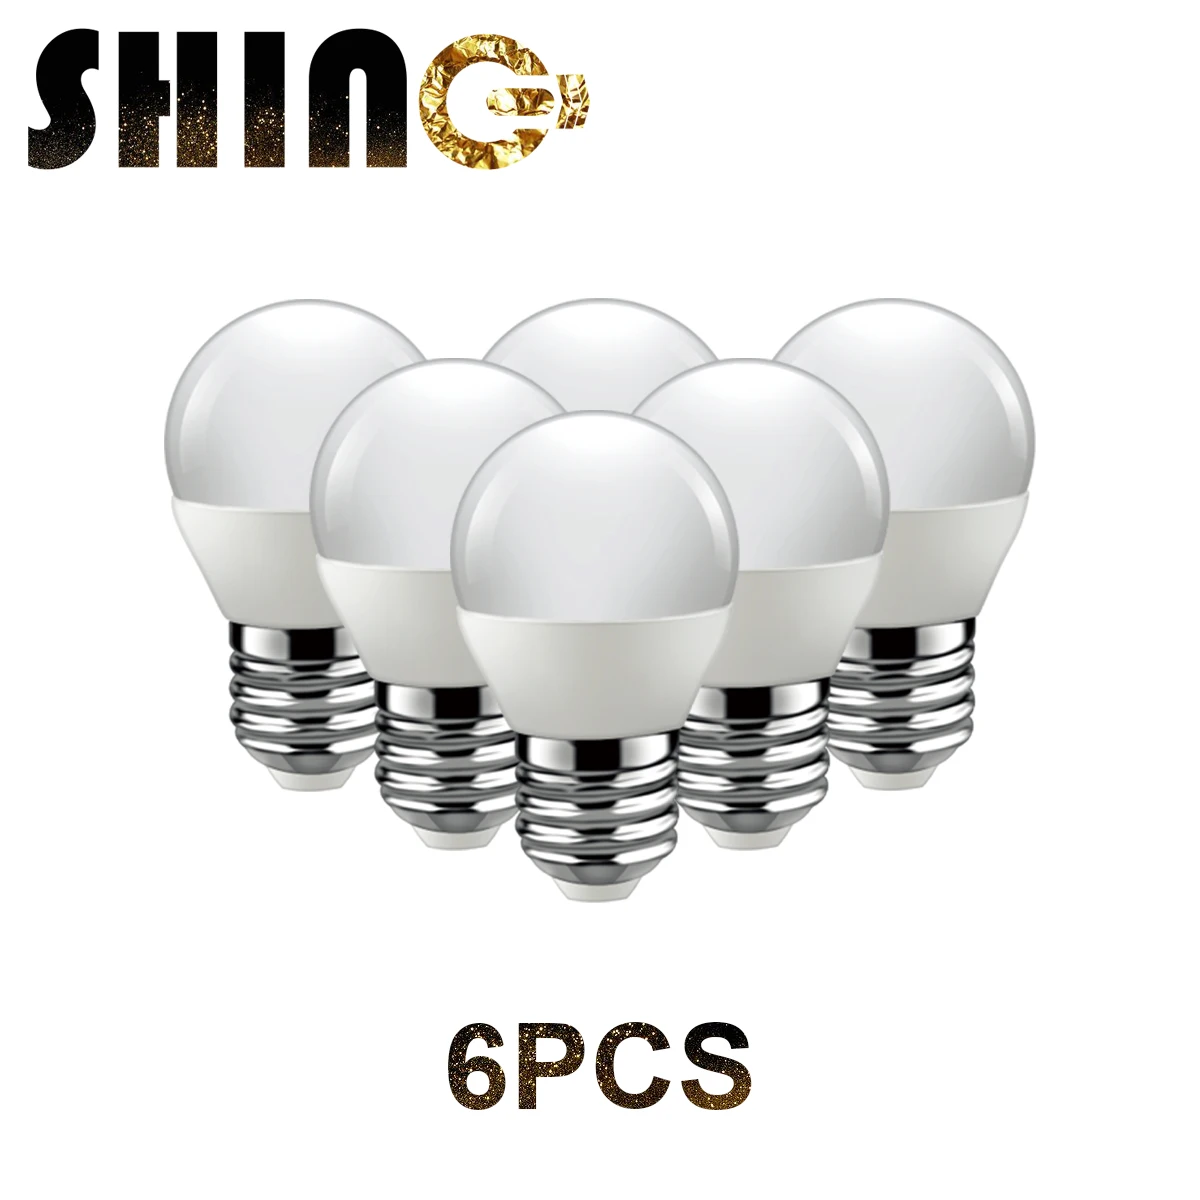 

6pcs/lot 2021 Sale Limited Ce Emc Lvd Rohs Focos Led Bulb For Home Decoration Office G45 E27 5w Lampada 220v-240v Lamp Bombillas